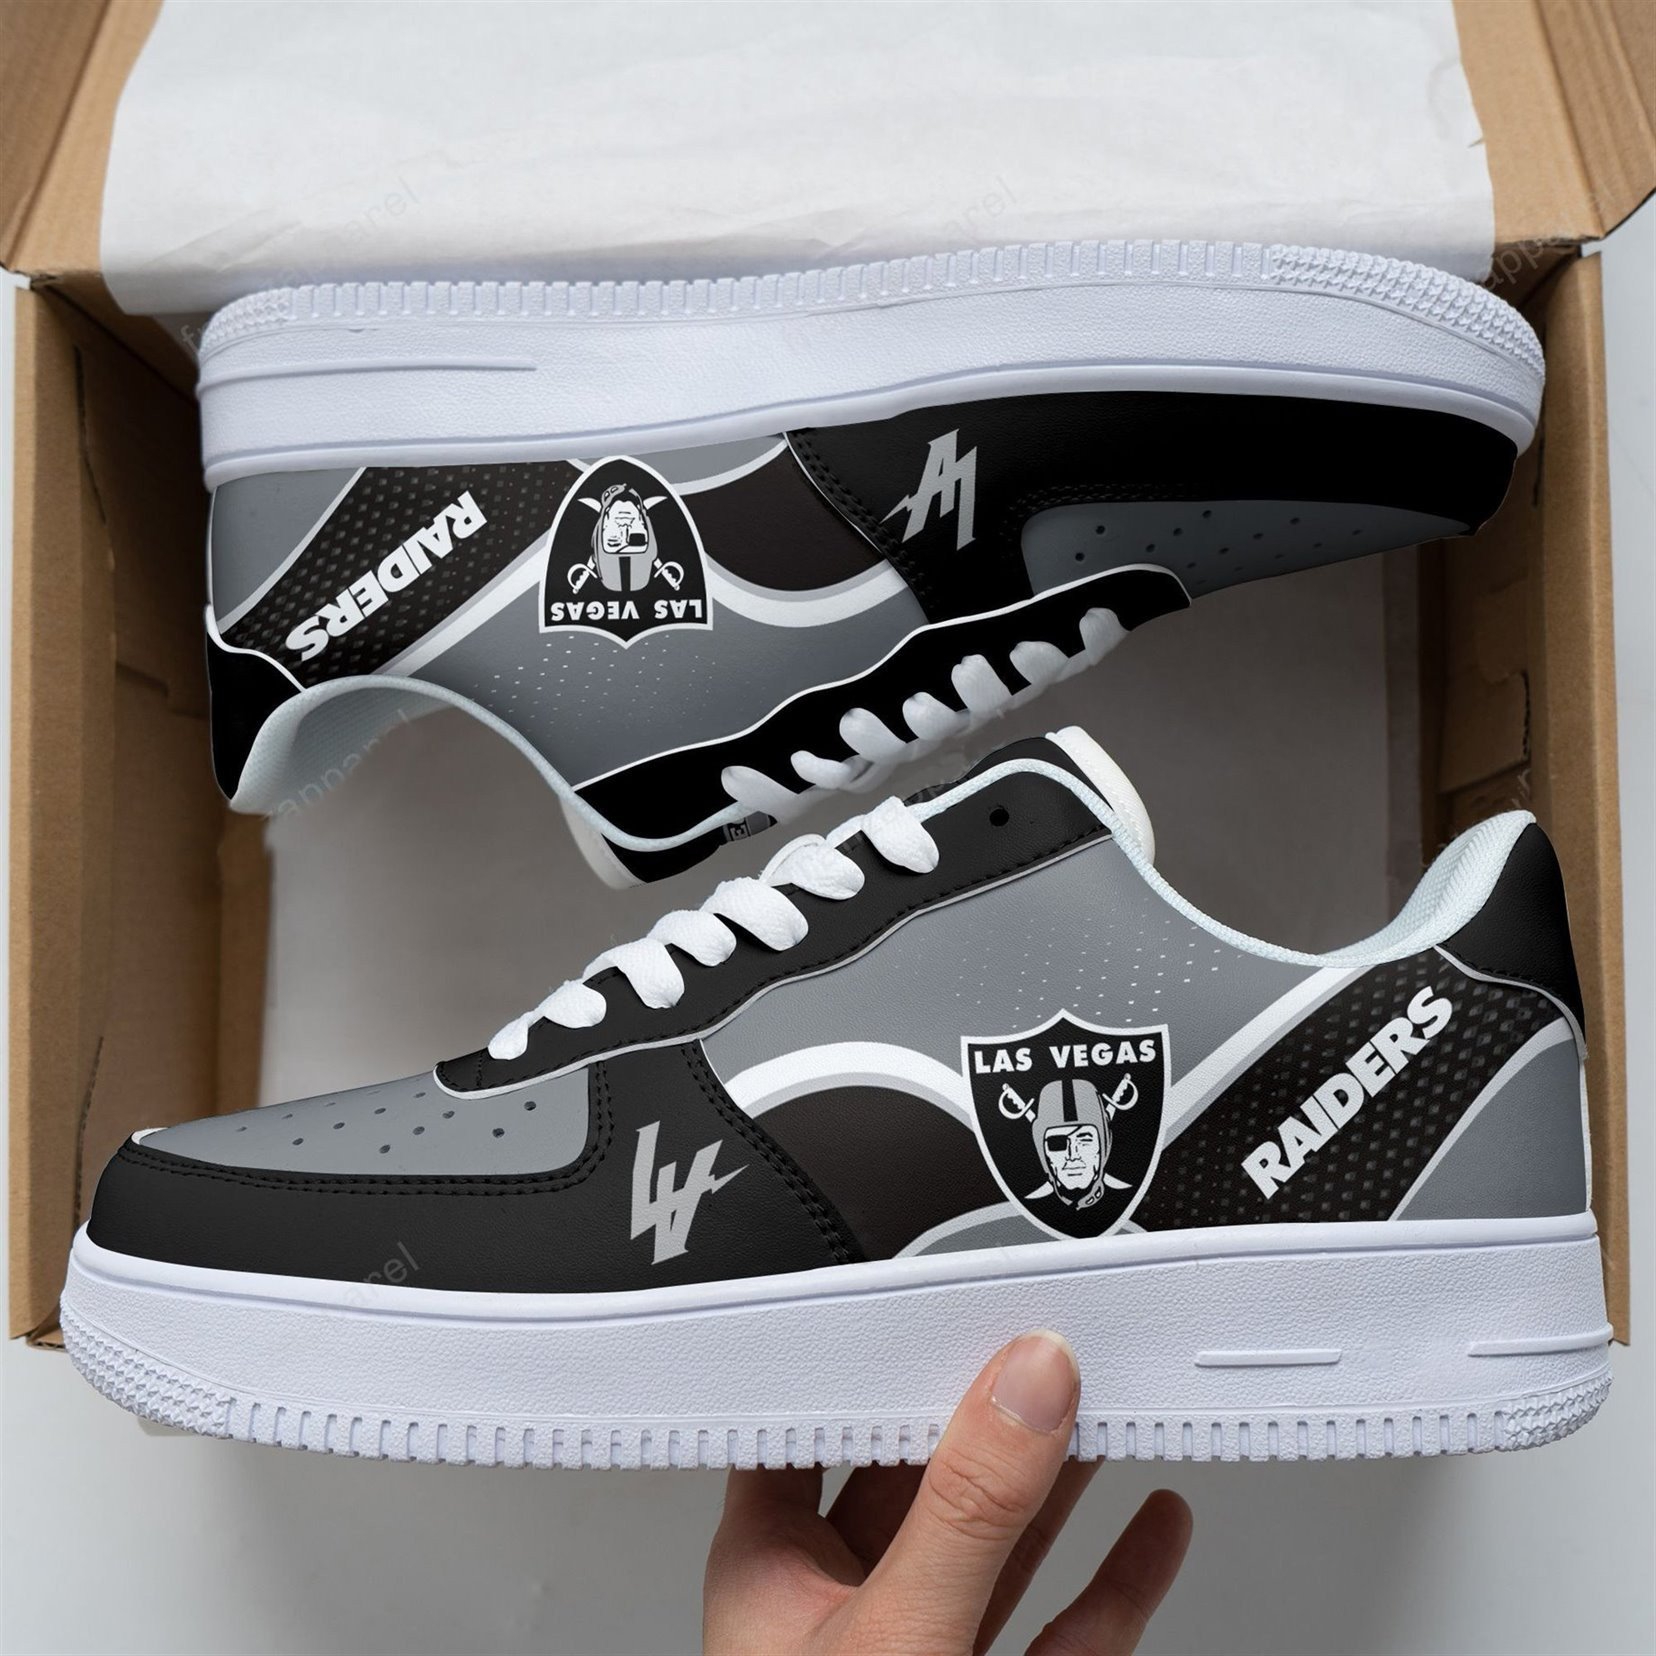 Hermana cálmese Unirse Oakland Raiders Air Force Football Shoes V40 On Sale - Tana Elegant